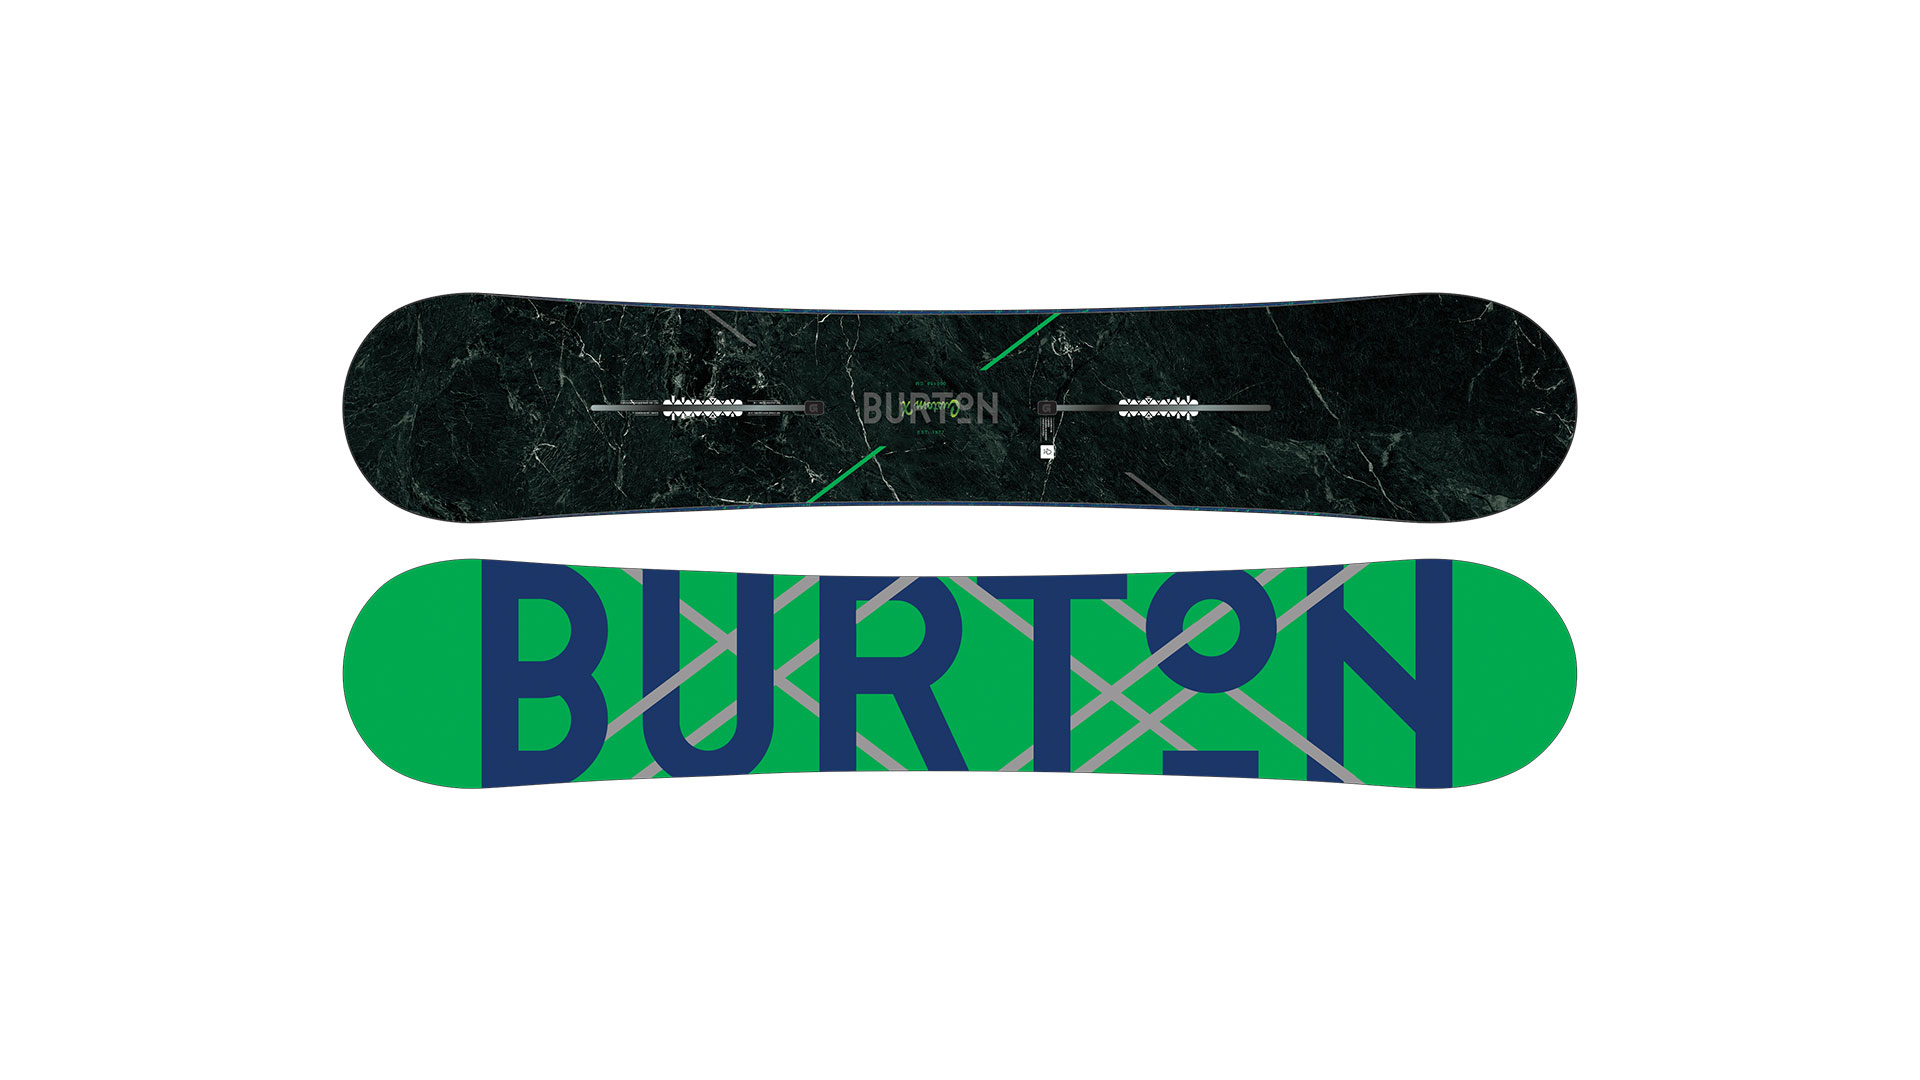 Burton Snowboards - 40 Years Forward - Whitelines Sn